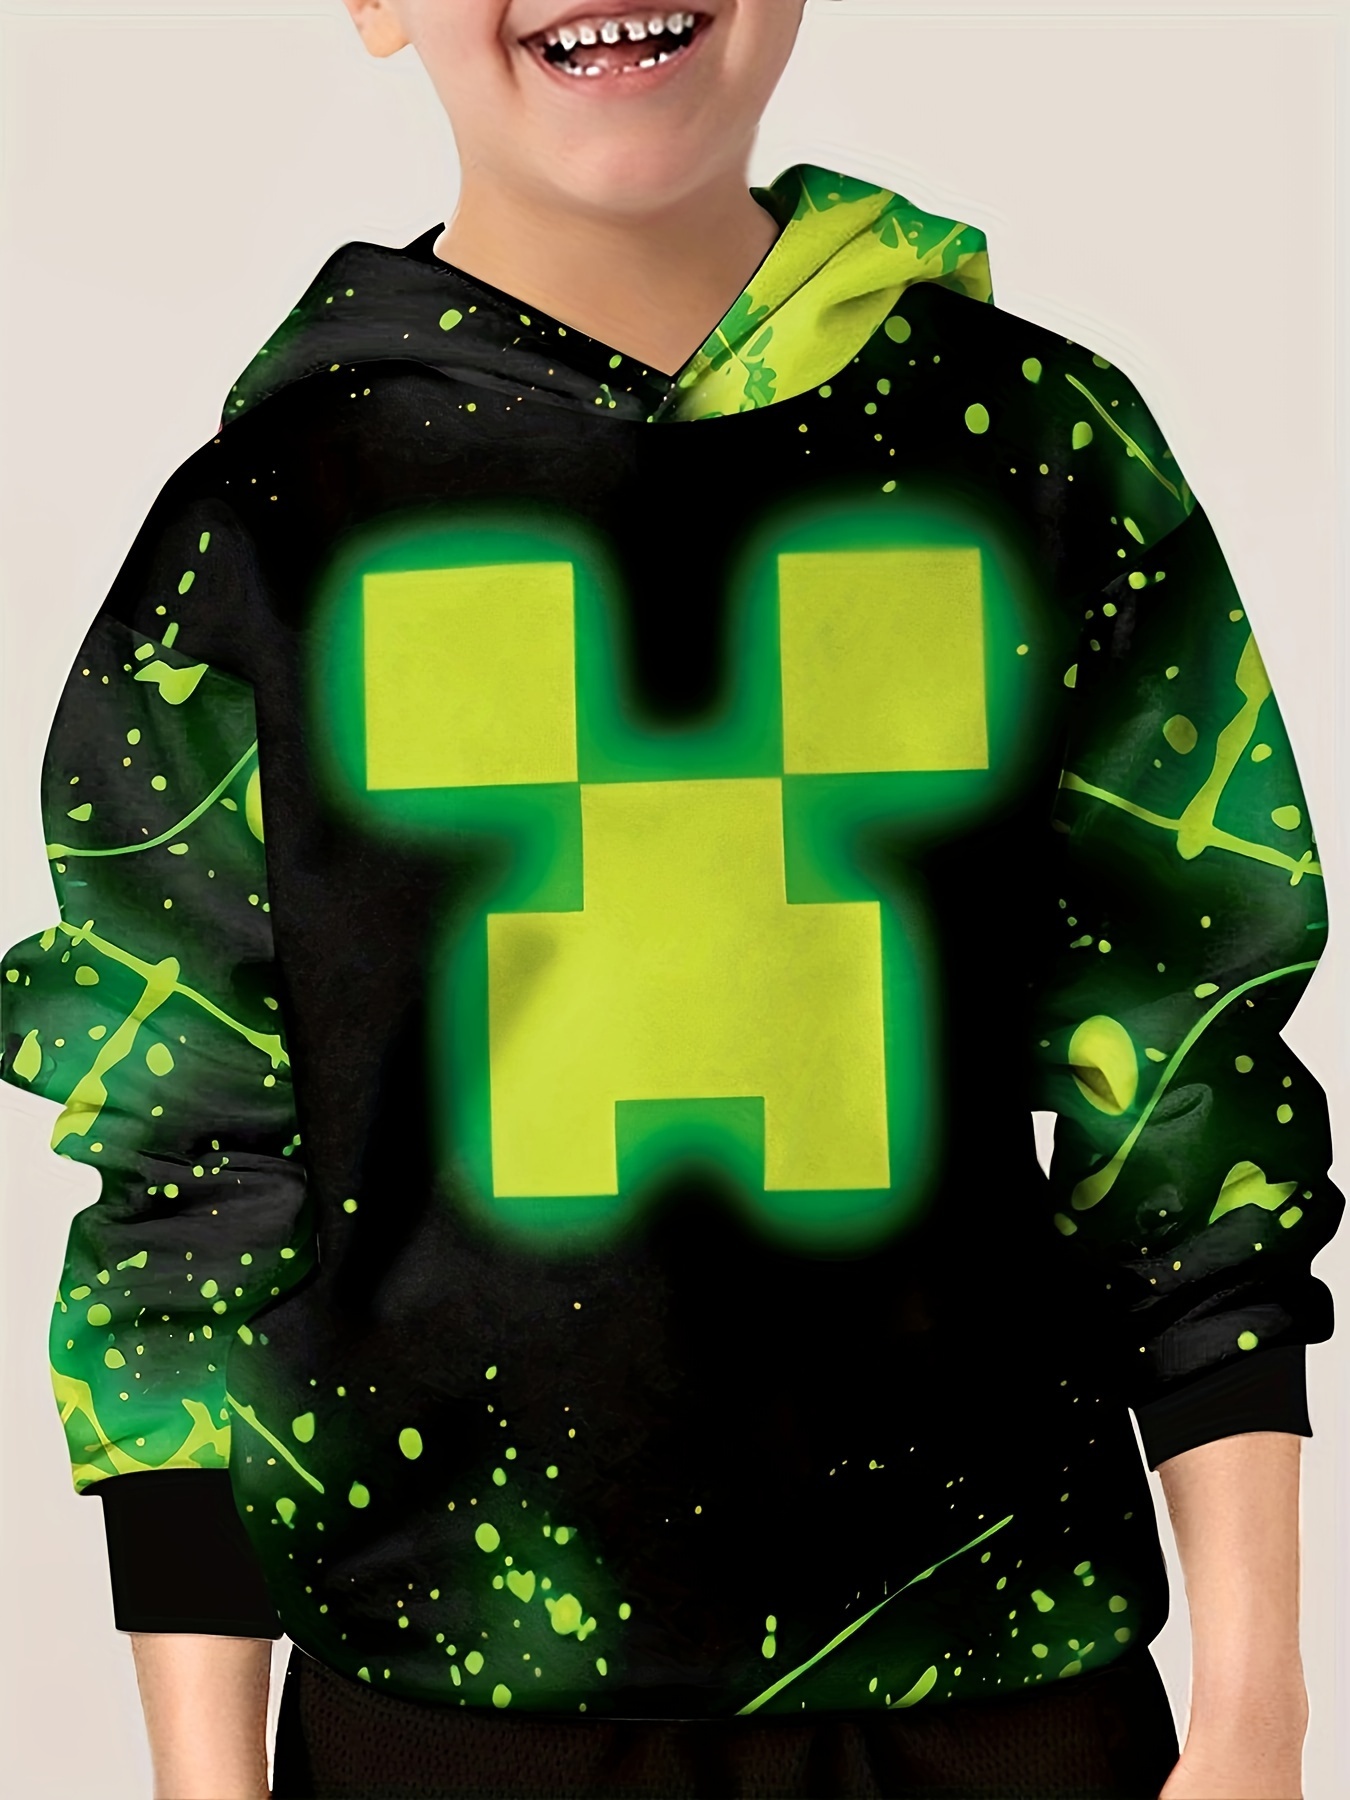 Minecraft Creeper Face Long Sleeve Black Youth Hooded Sweatshirt-XS